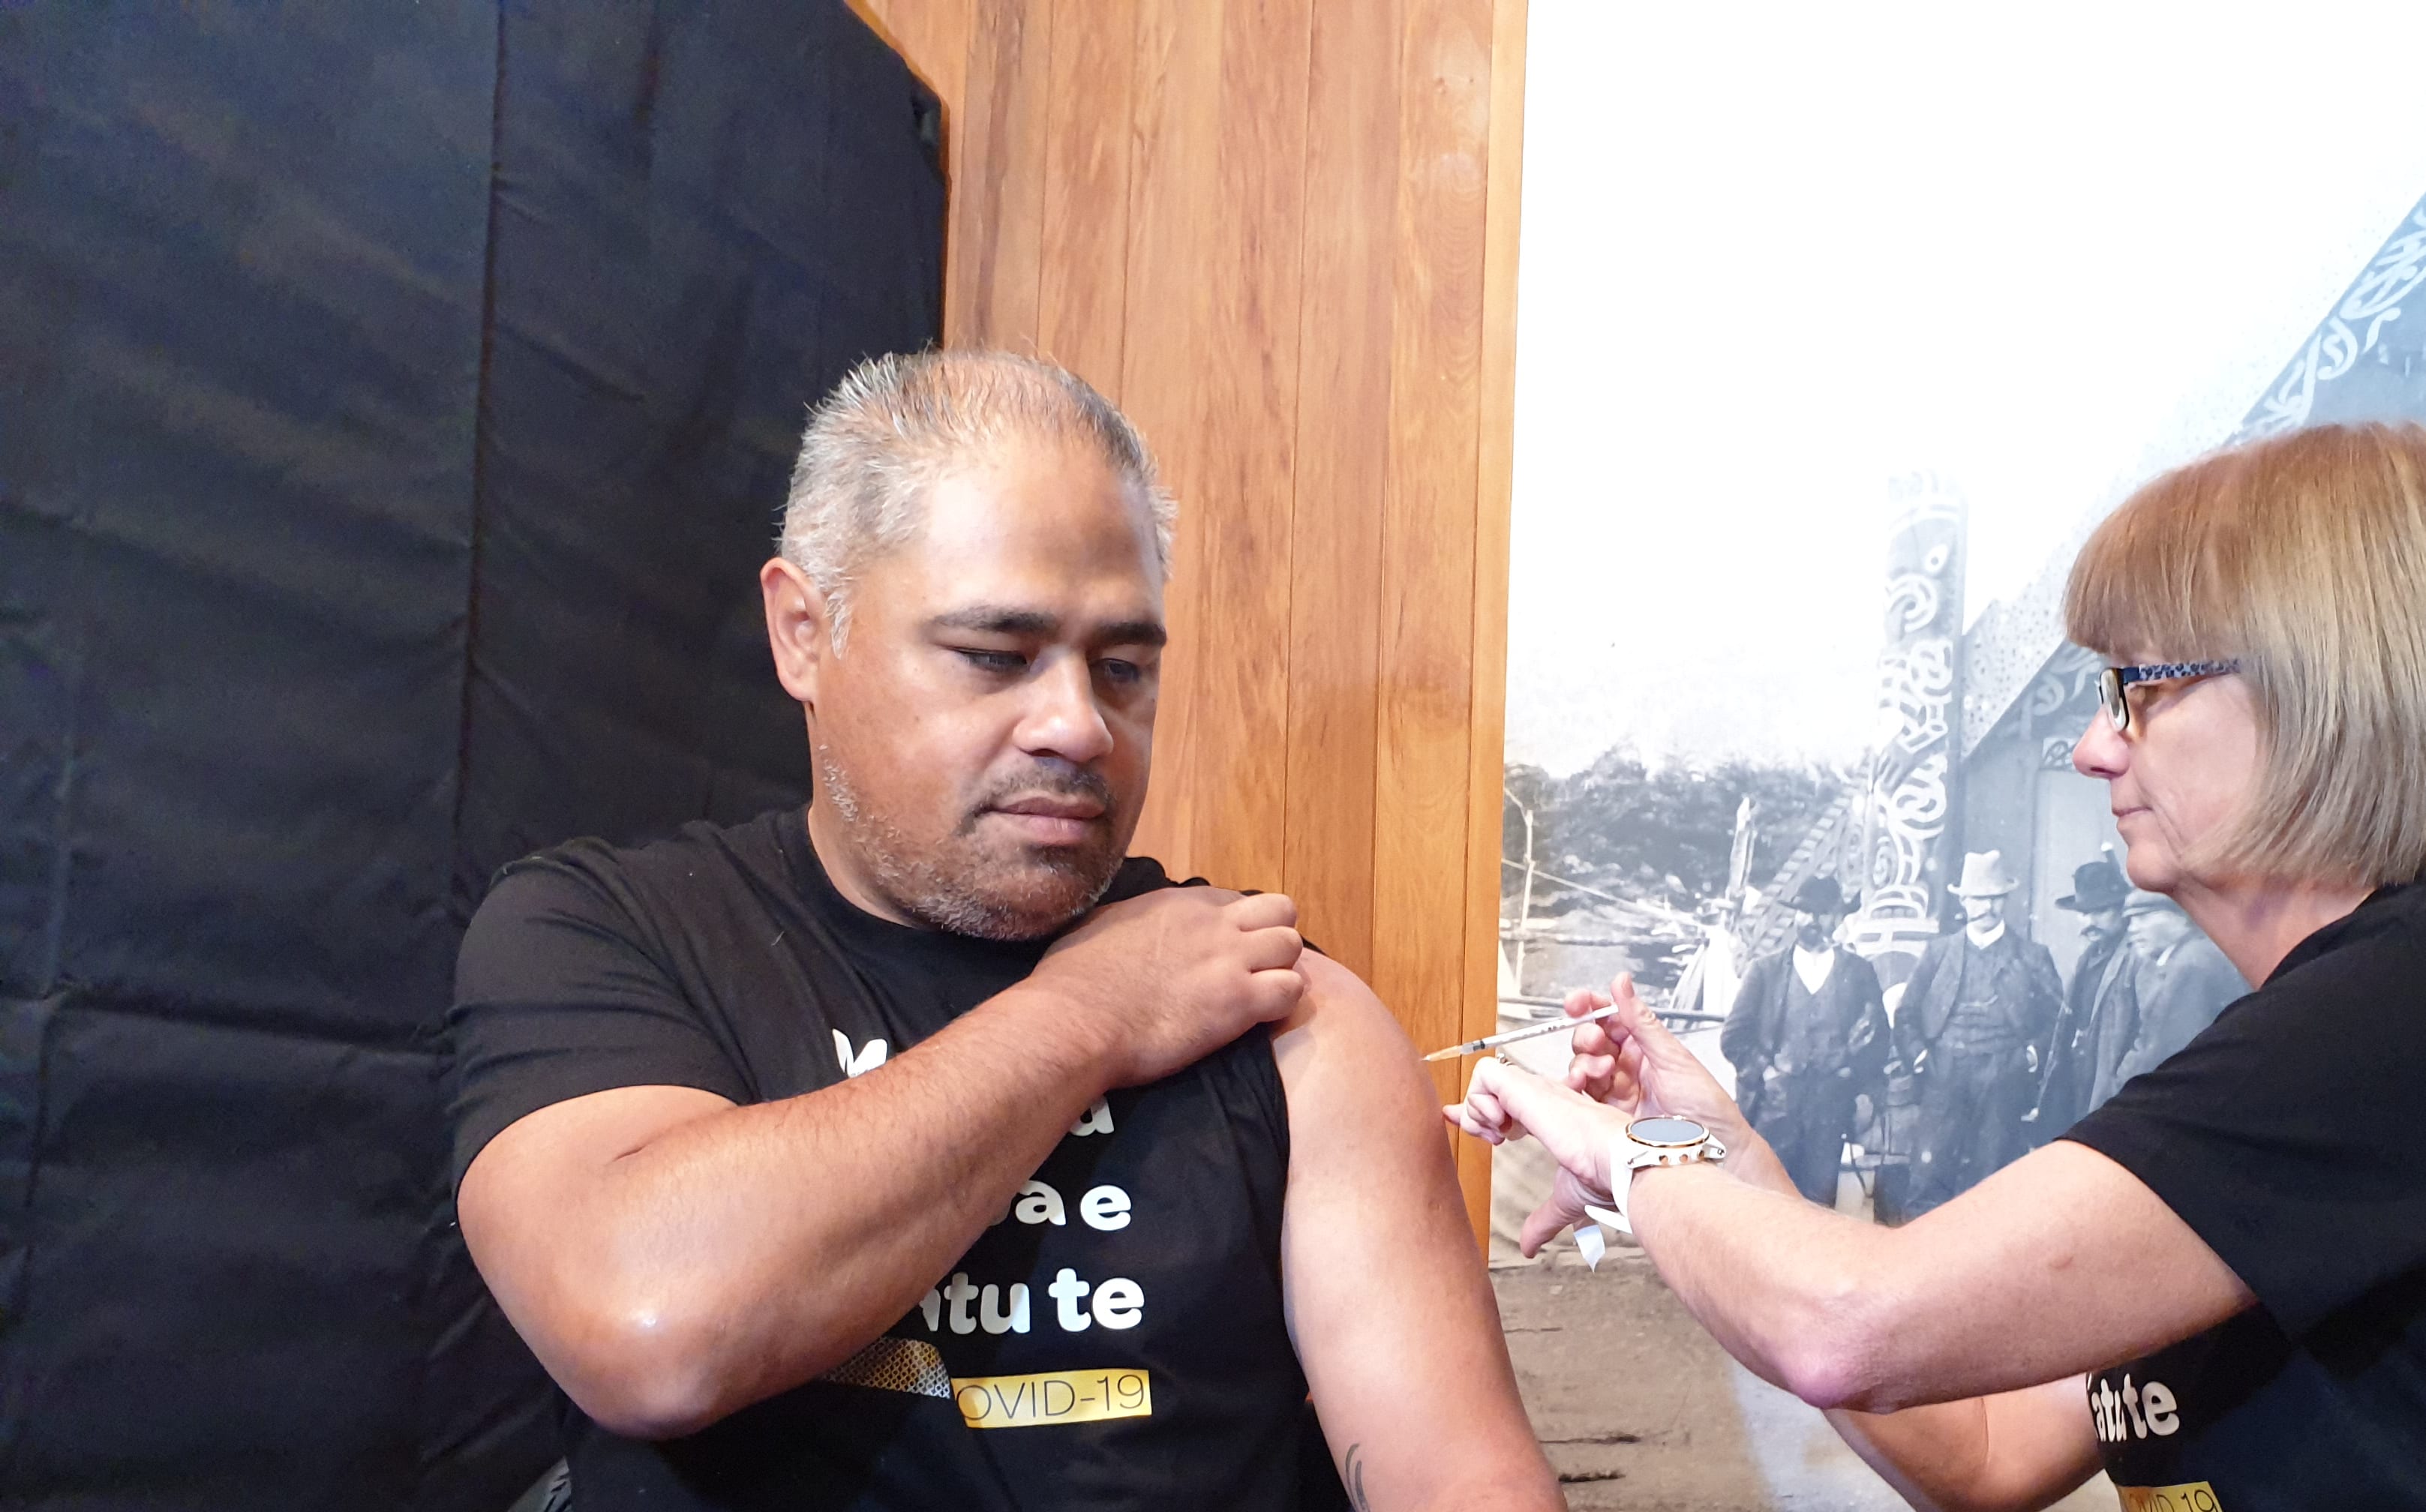 Associate Health Minister Peeni Henare receives a Covid-19 vaccine, Porirua, 7 April 2021.